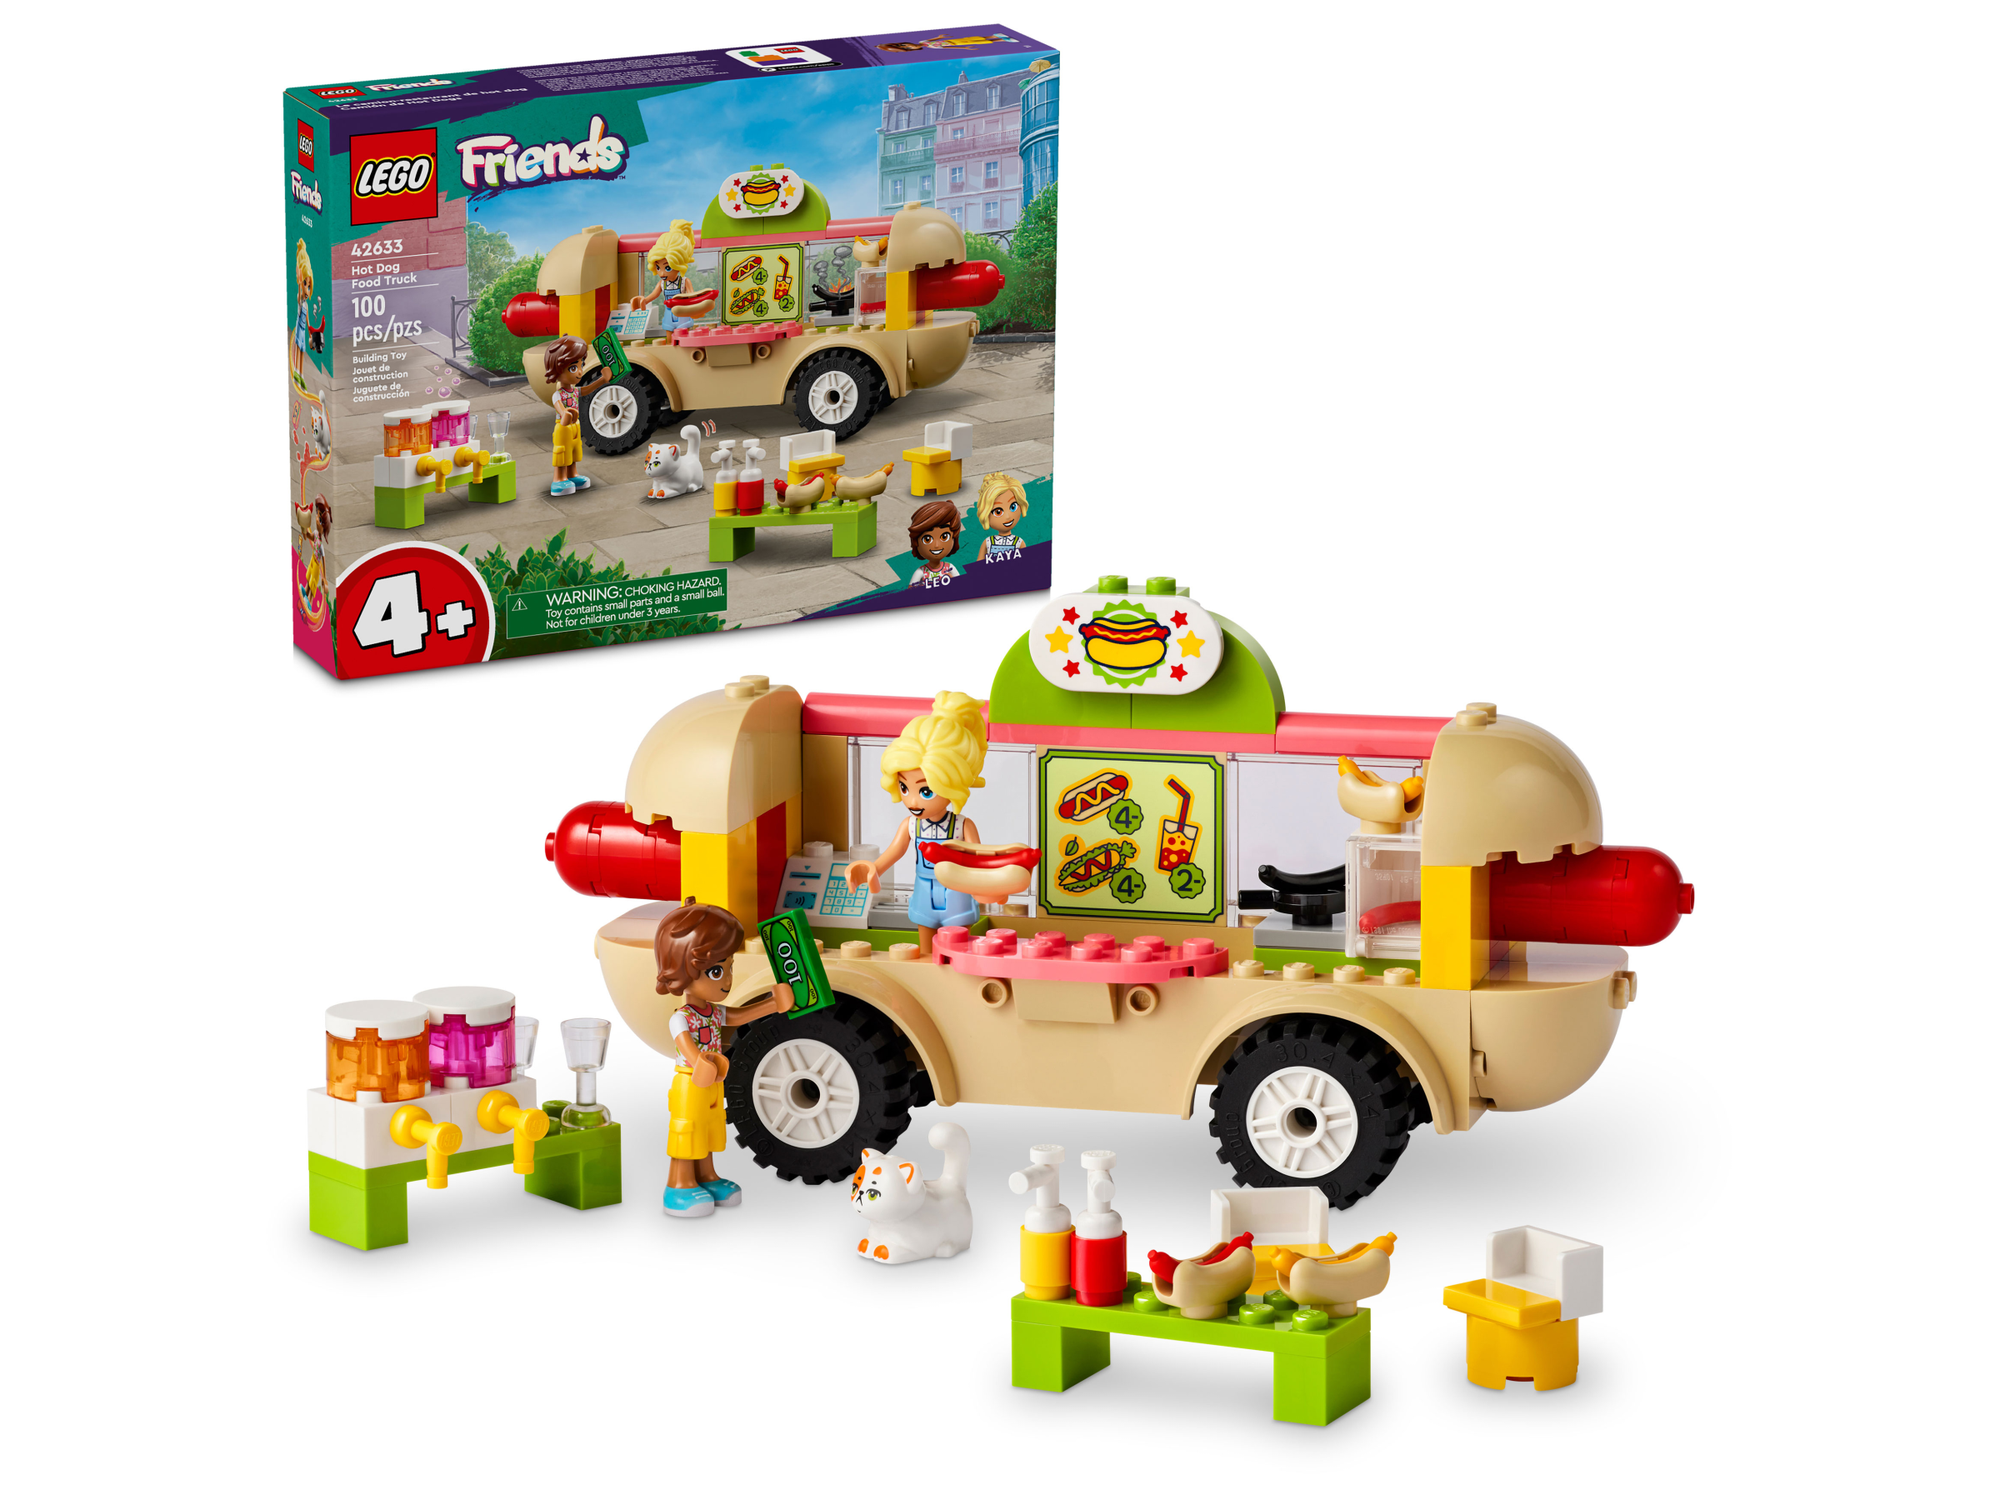 Конструктор LEGO Friends 42633 Hot Dog Food Truck, 100 дет.